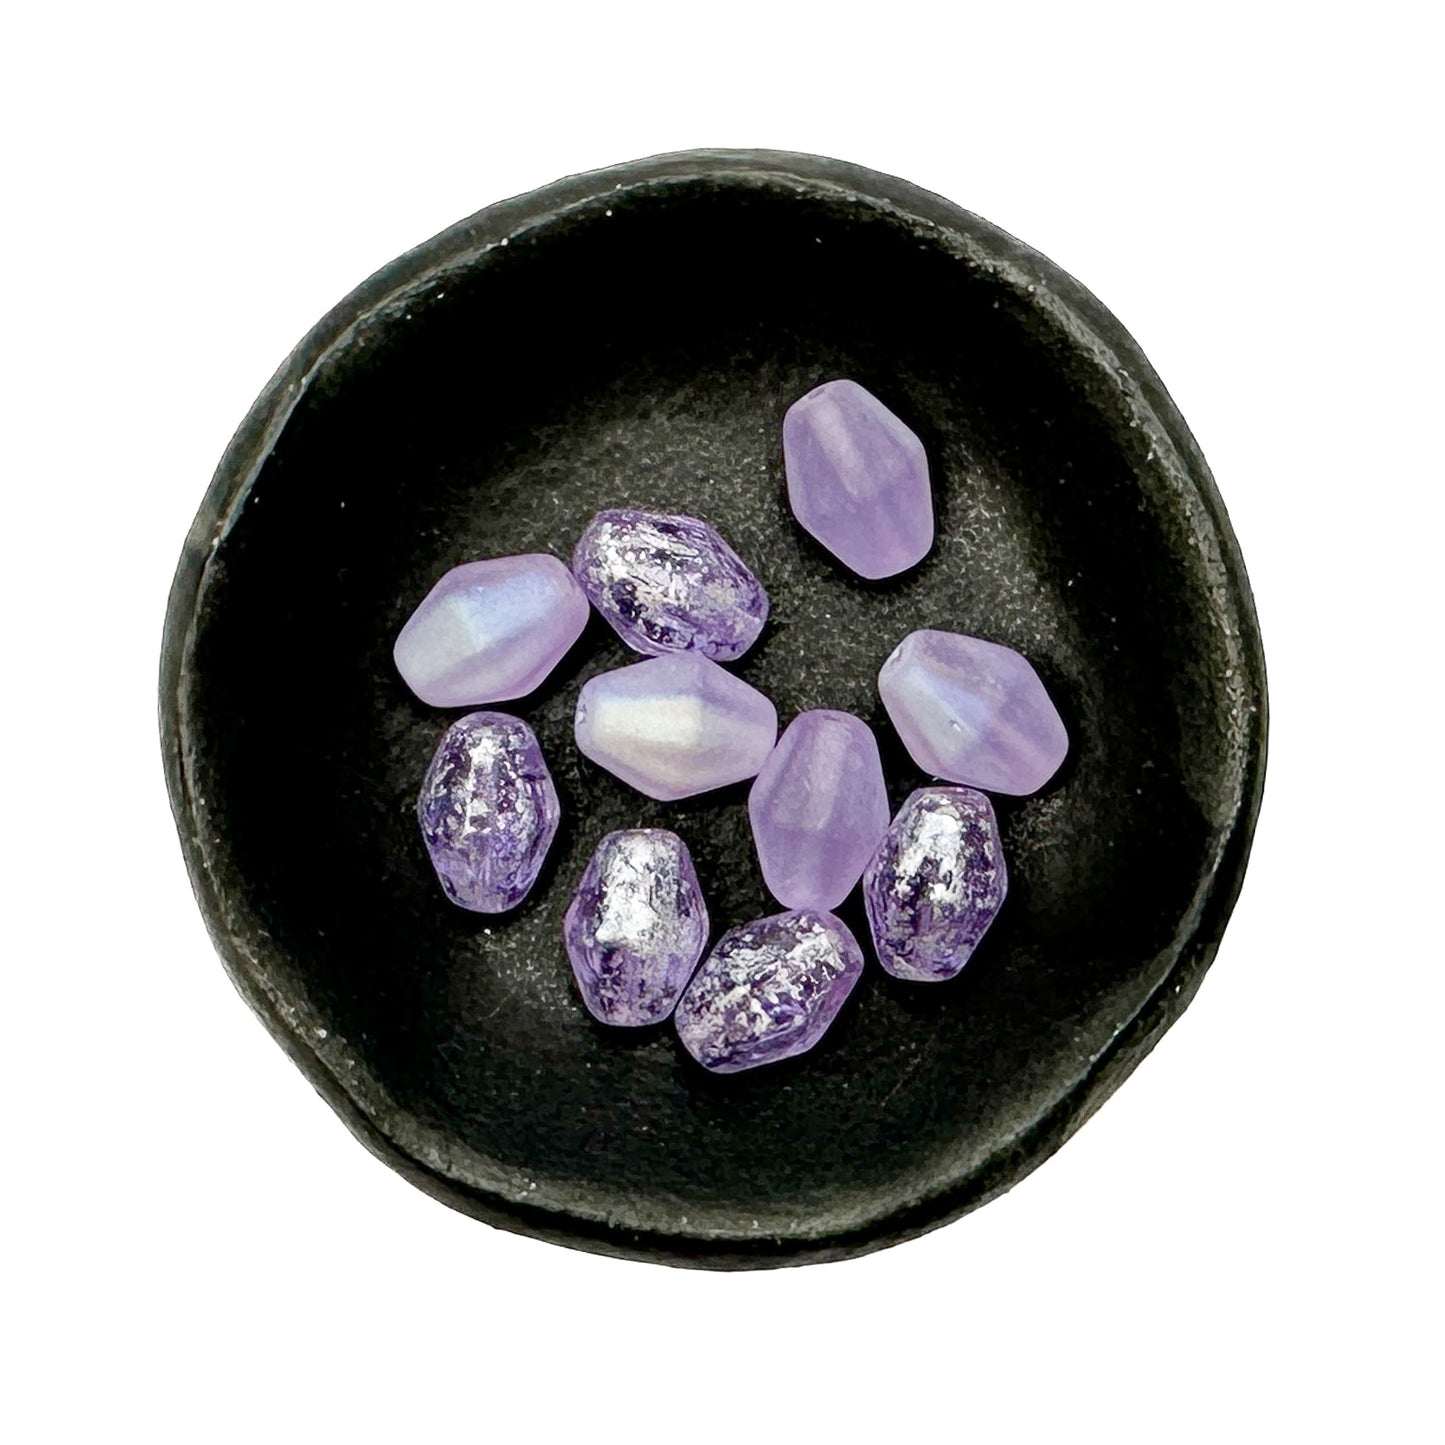 Lavender Splash Czech Glass Bicone Bead Mix - 10 pcs.-The Bead Gallery Honolulu